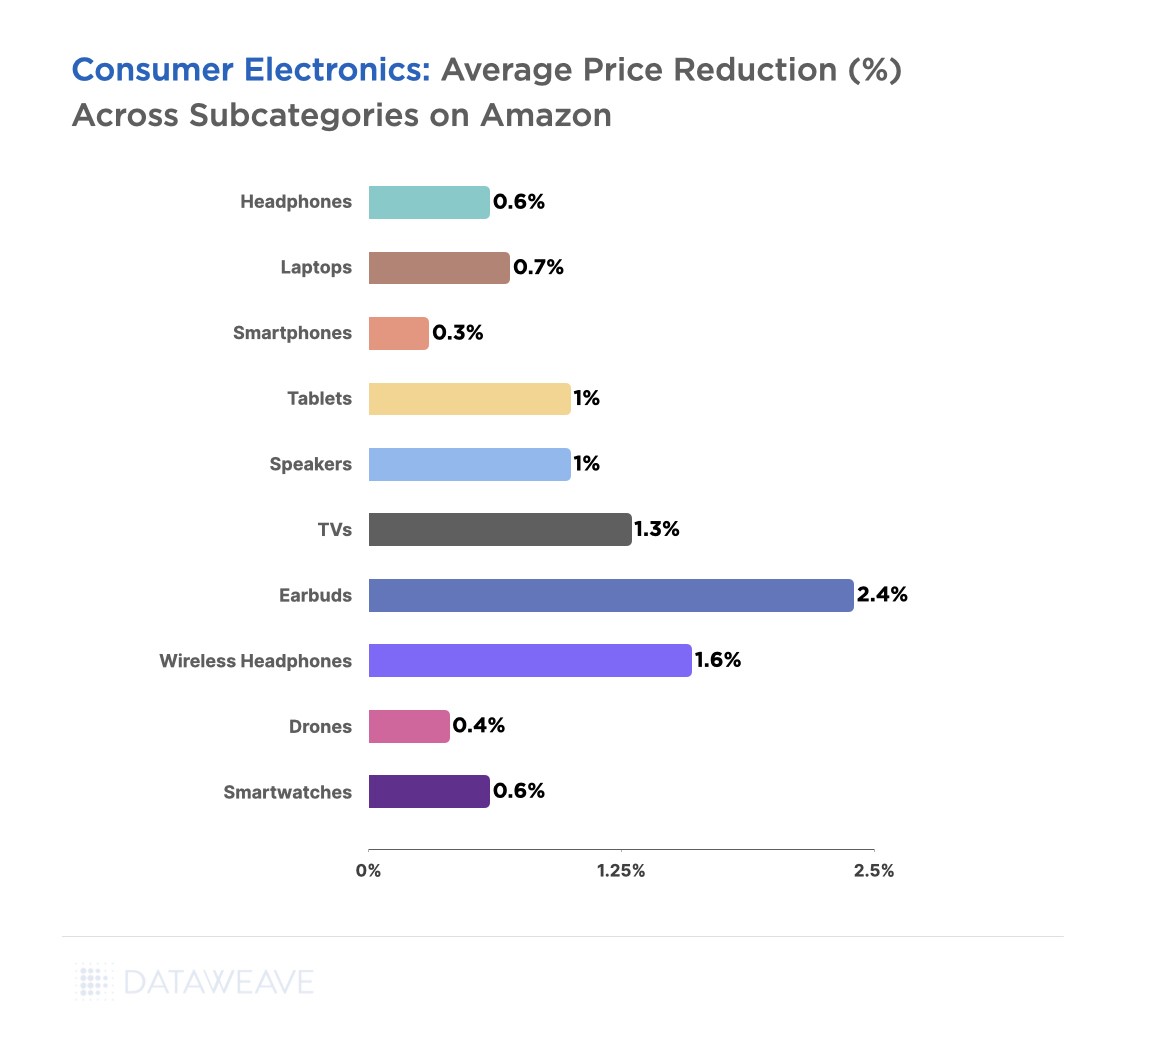 Consumer electronics average price reduction across subcategories on Amazon.